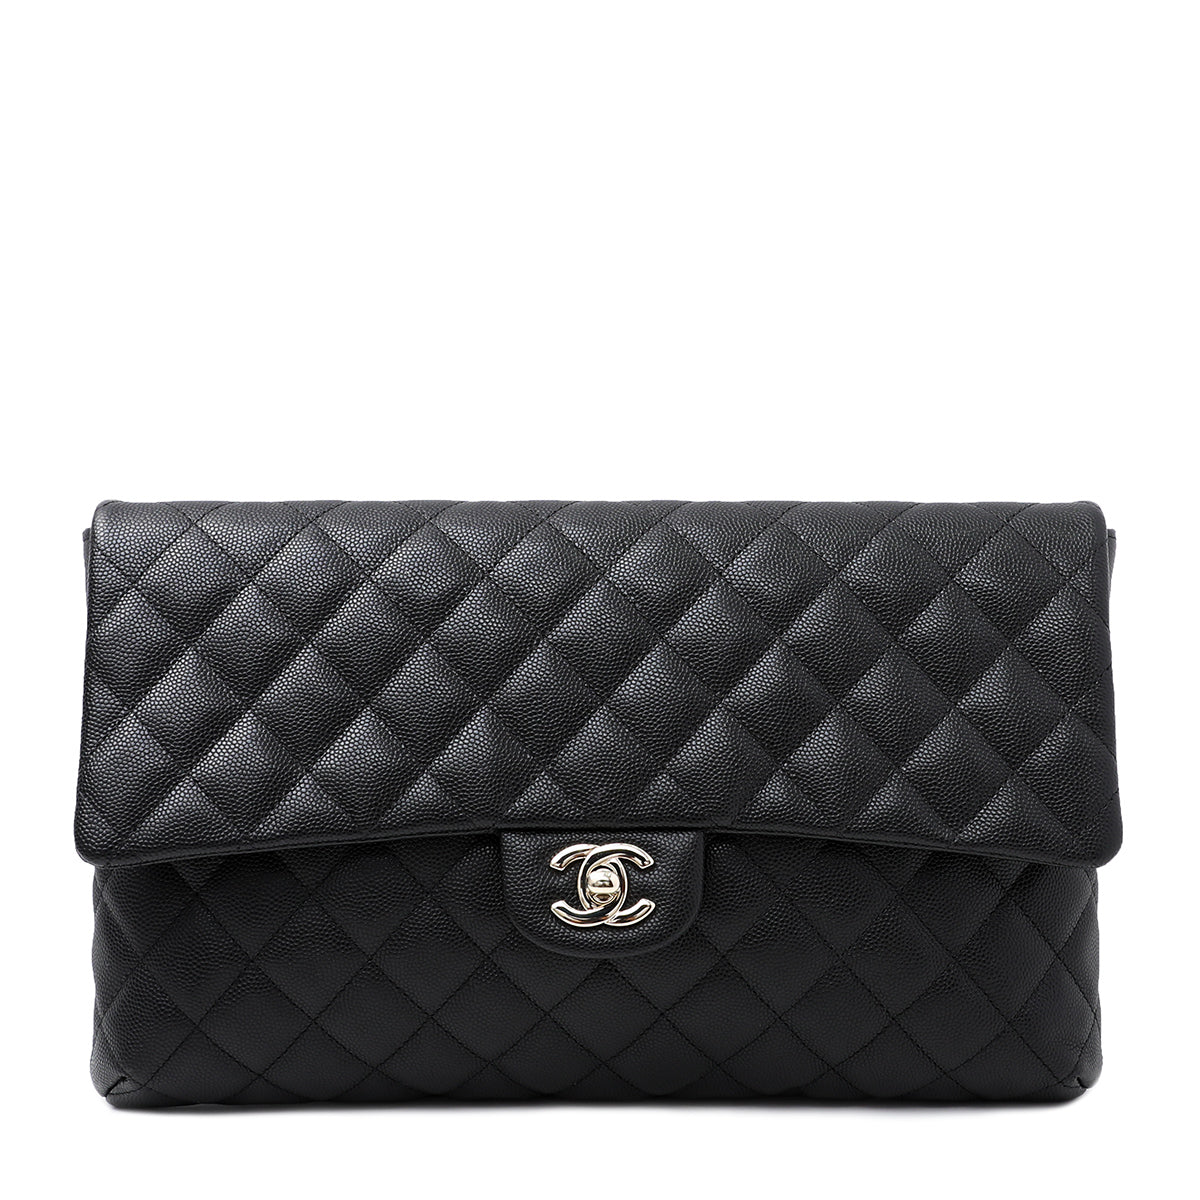 Chanel Black Classic Flap Clutch Bag